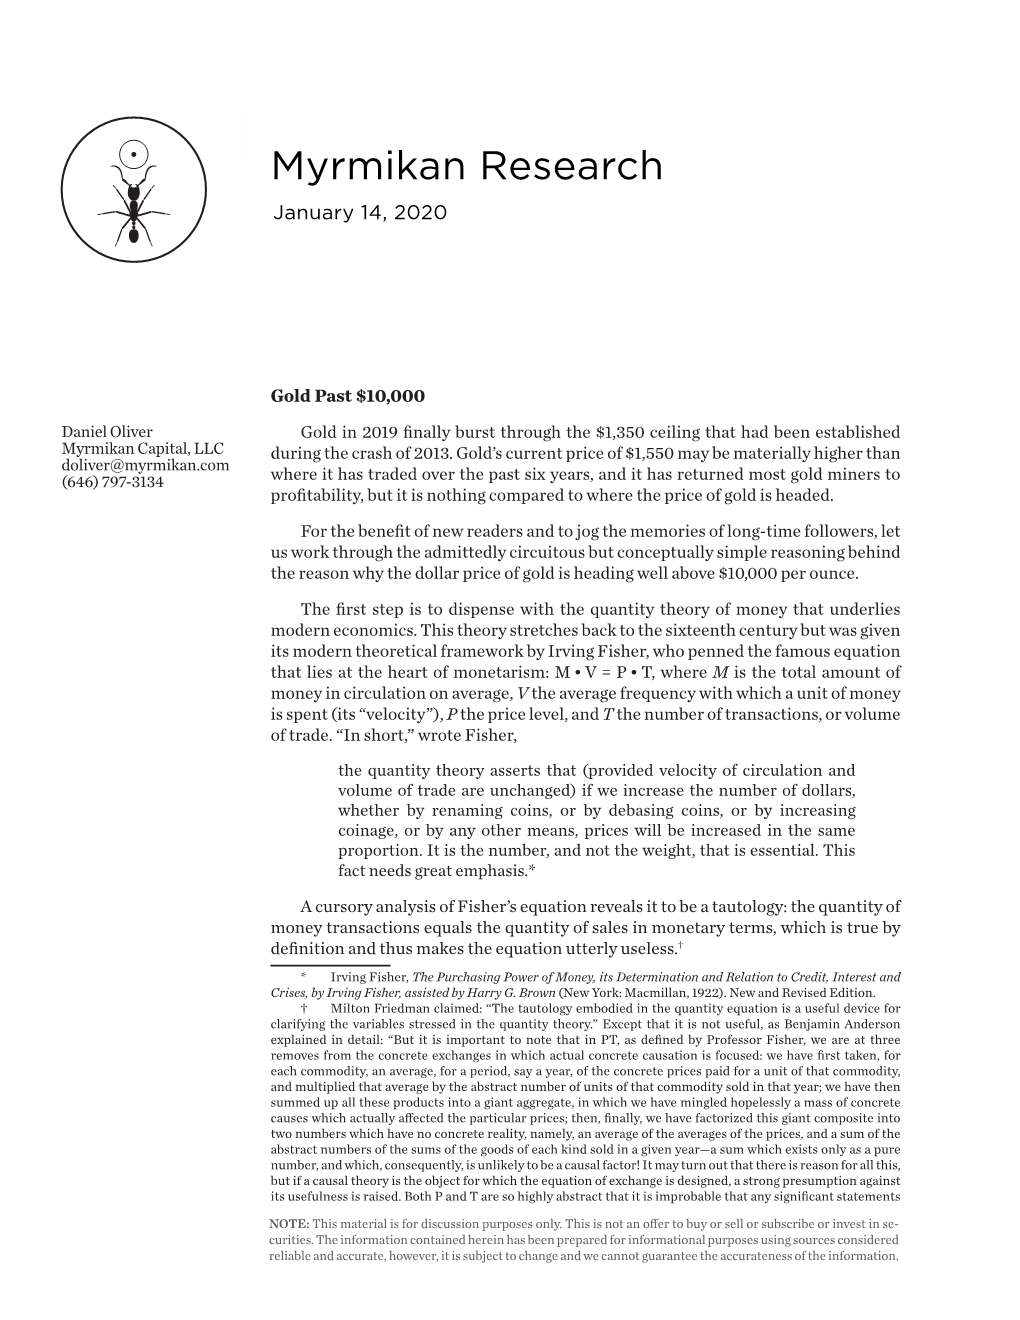 Myrmikan Research January 14, 2020